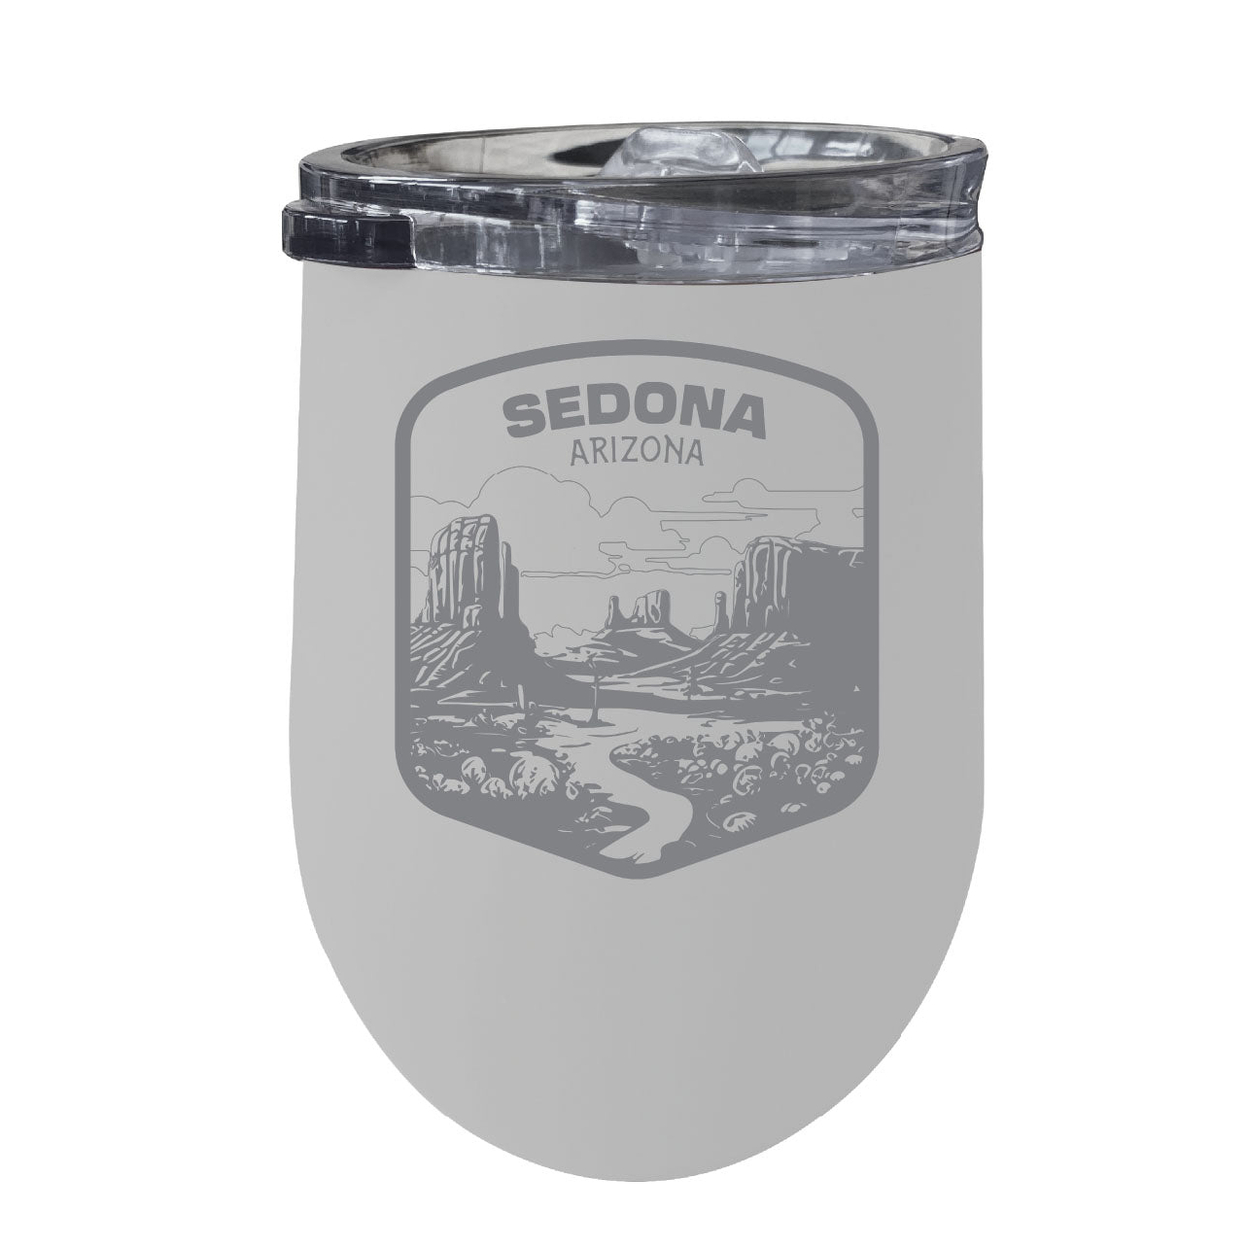 Sedona Arizona Souvenir 12 Oz Engraved Insulated Wine Stainless Steel Tumbler - Black,,4-Pack